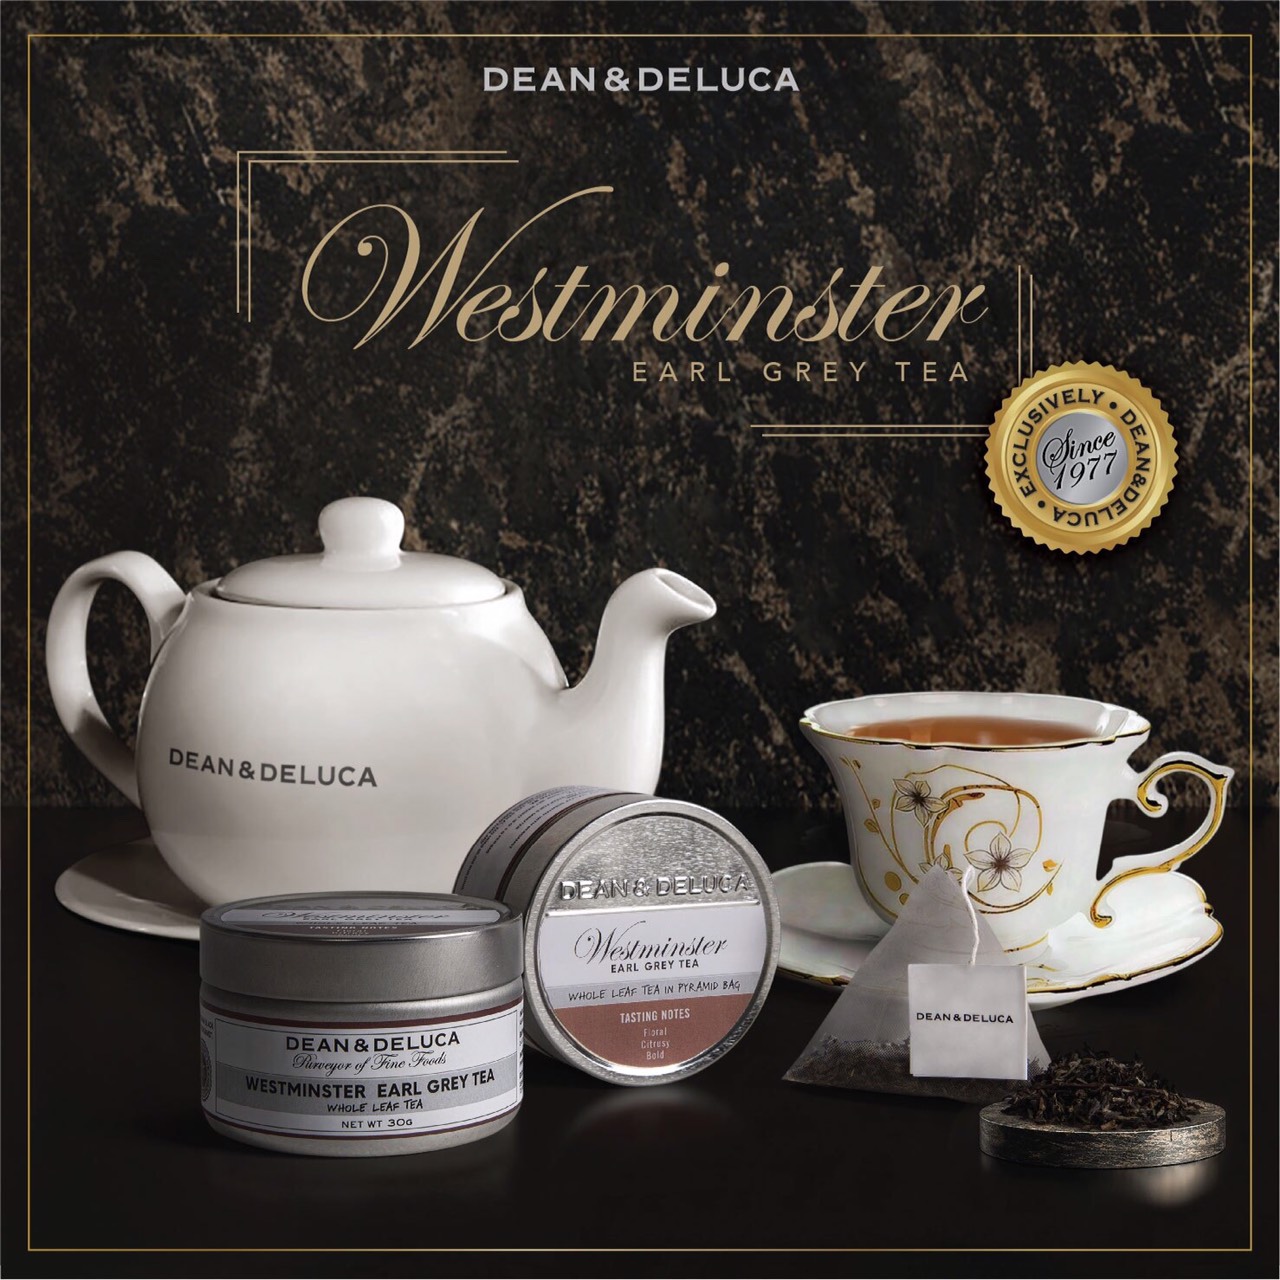 DEAN&DELUCA WESTMINSTER EARL GREY TEA